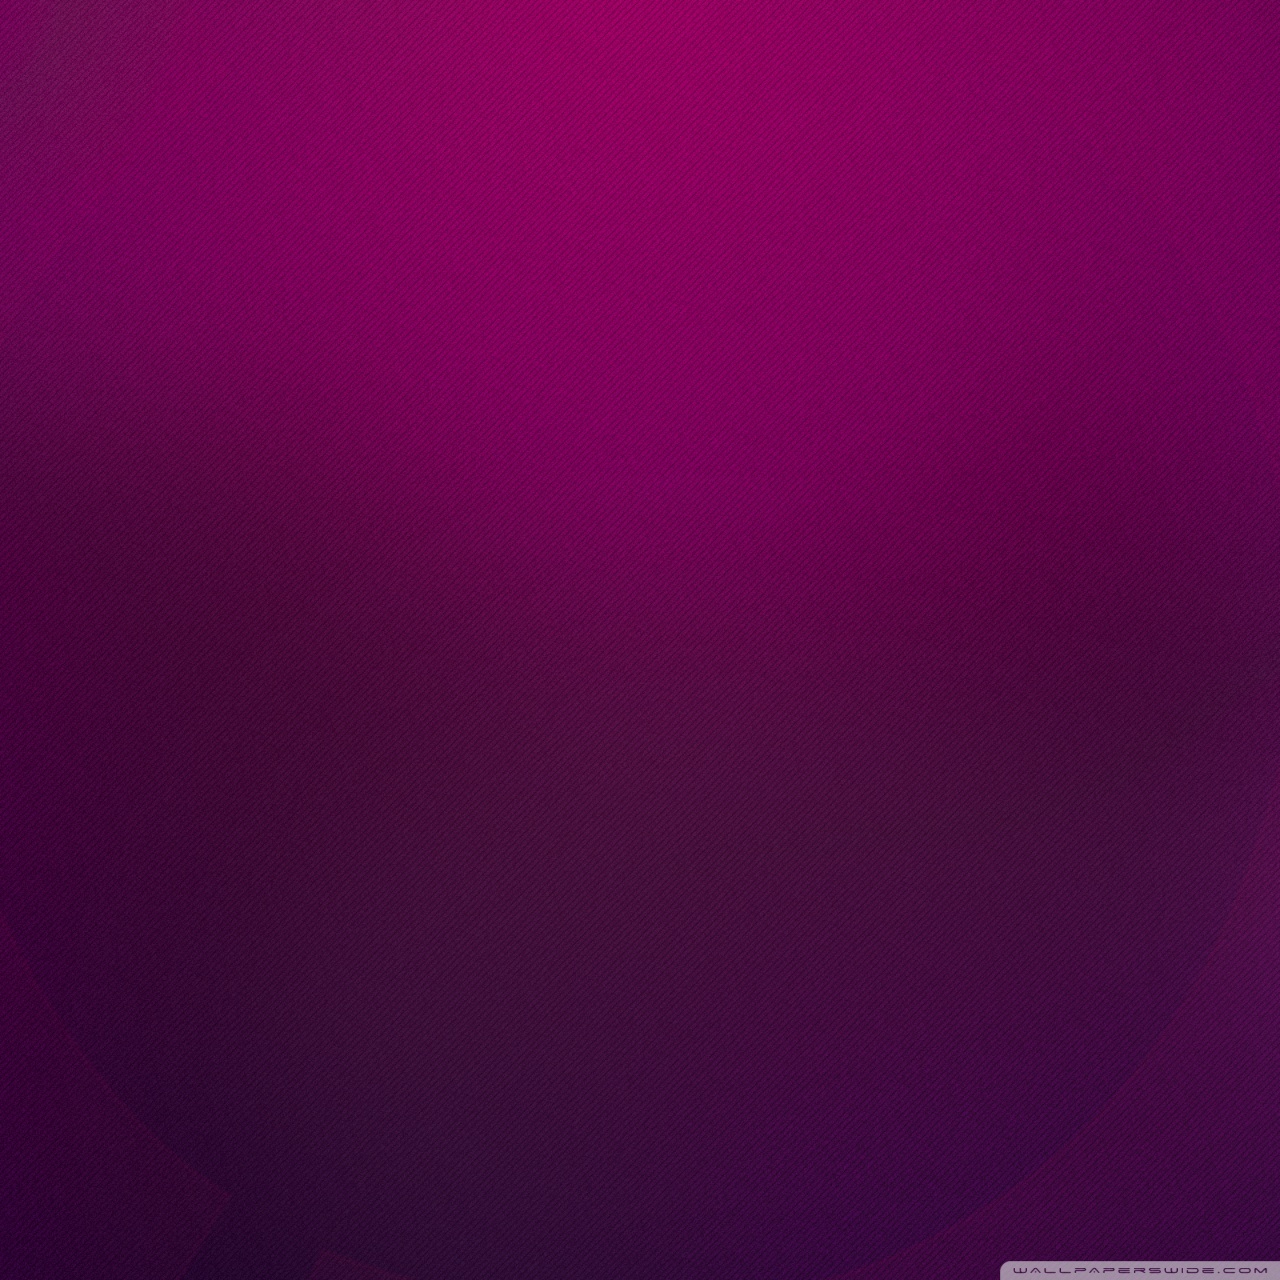 Android用の無地の壁紙 バイオレット 紫の 赤 ピンク ライラック Wallpaperuse